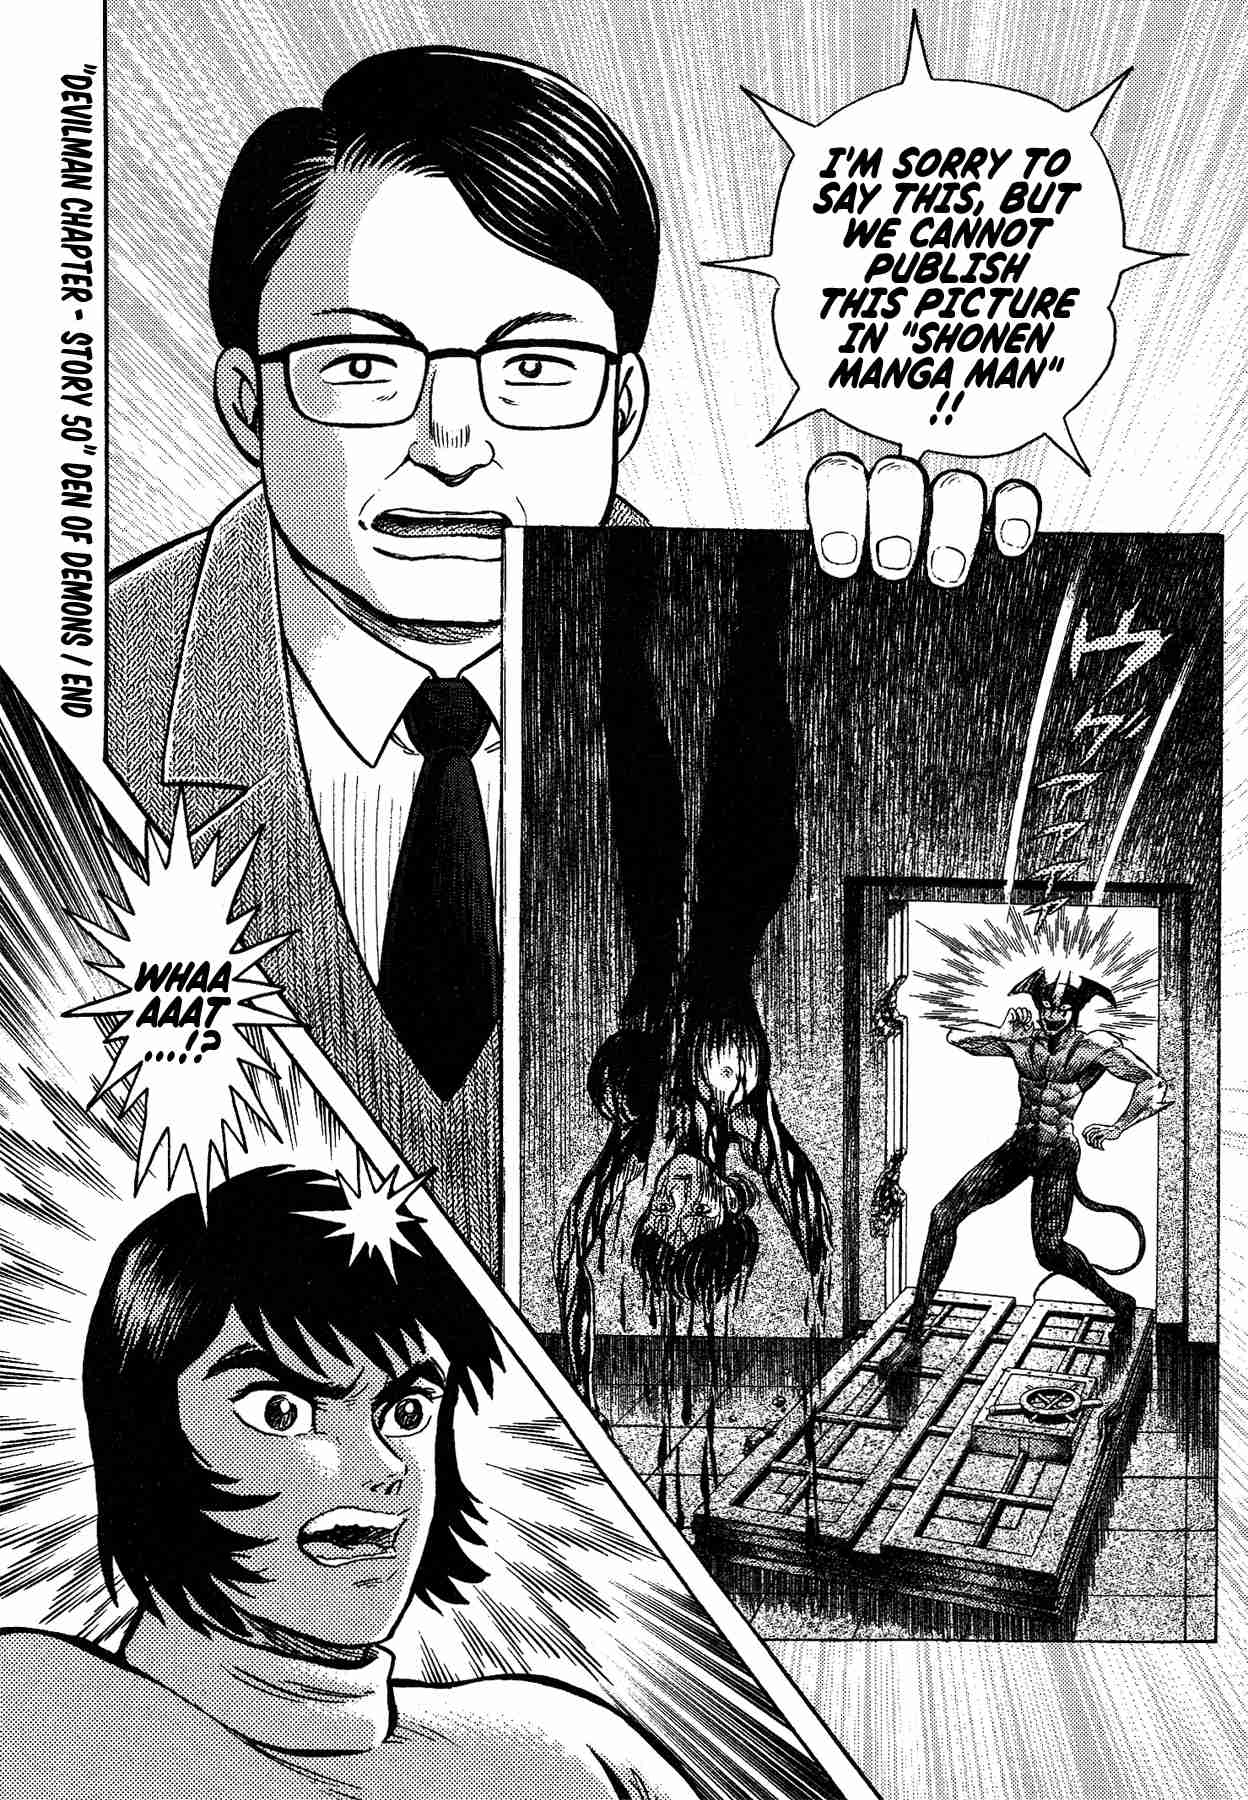 Gekiman! Devilman Chapter Vol. 6 Ch. 50 Den of Demons